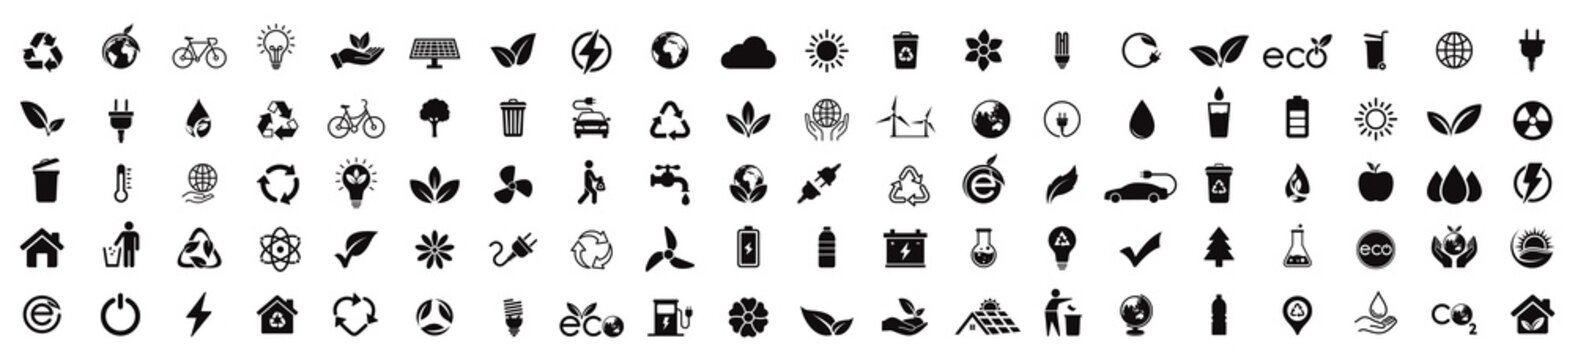 Ecology icon set. Ecofriendly icon, nature icons set on white background. Vector illustration